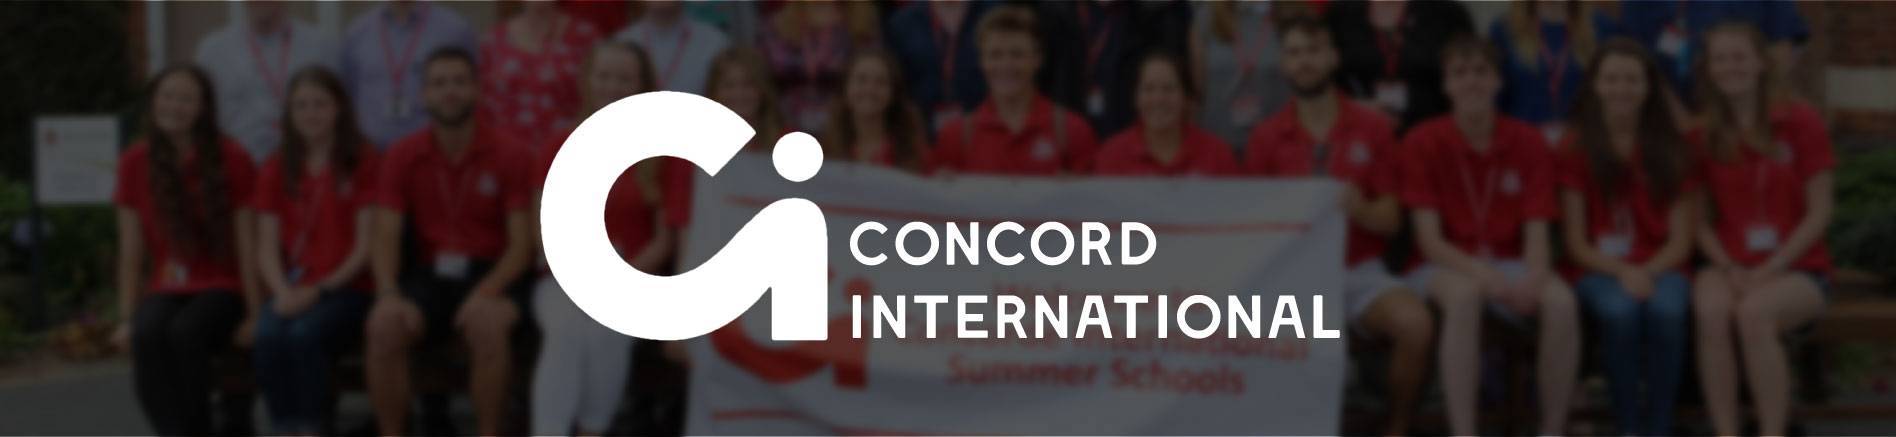 Concorde International
